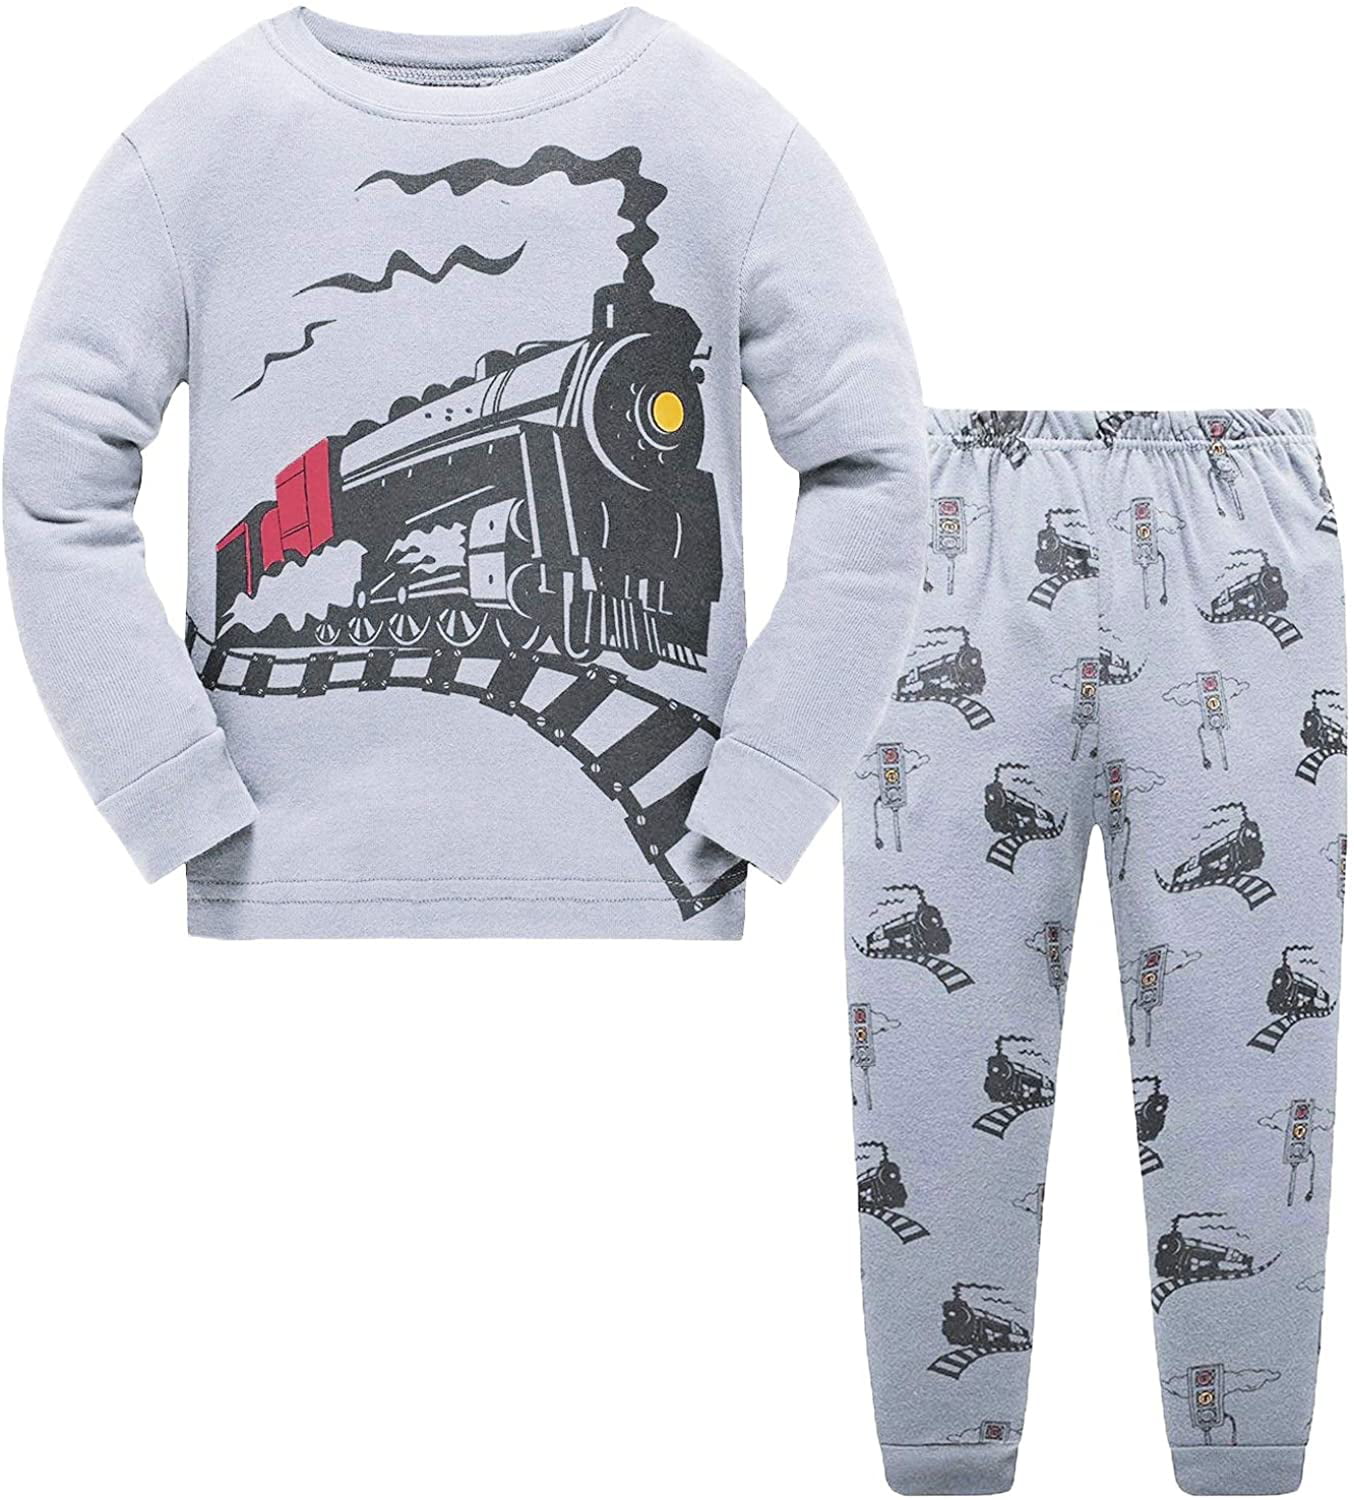 Toddler Boys Pajamas Fire Truck 100% Cotton Kids Train 2 Piece Pjs Sets Sleepwear Clothes Set 1-7 T